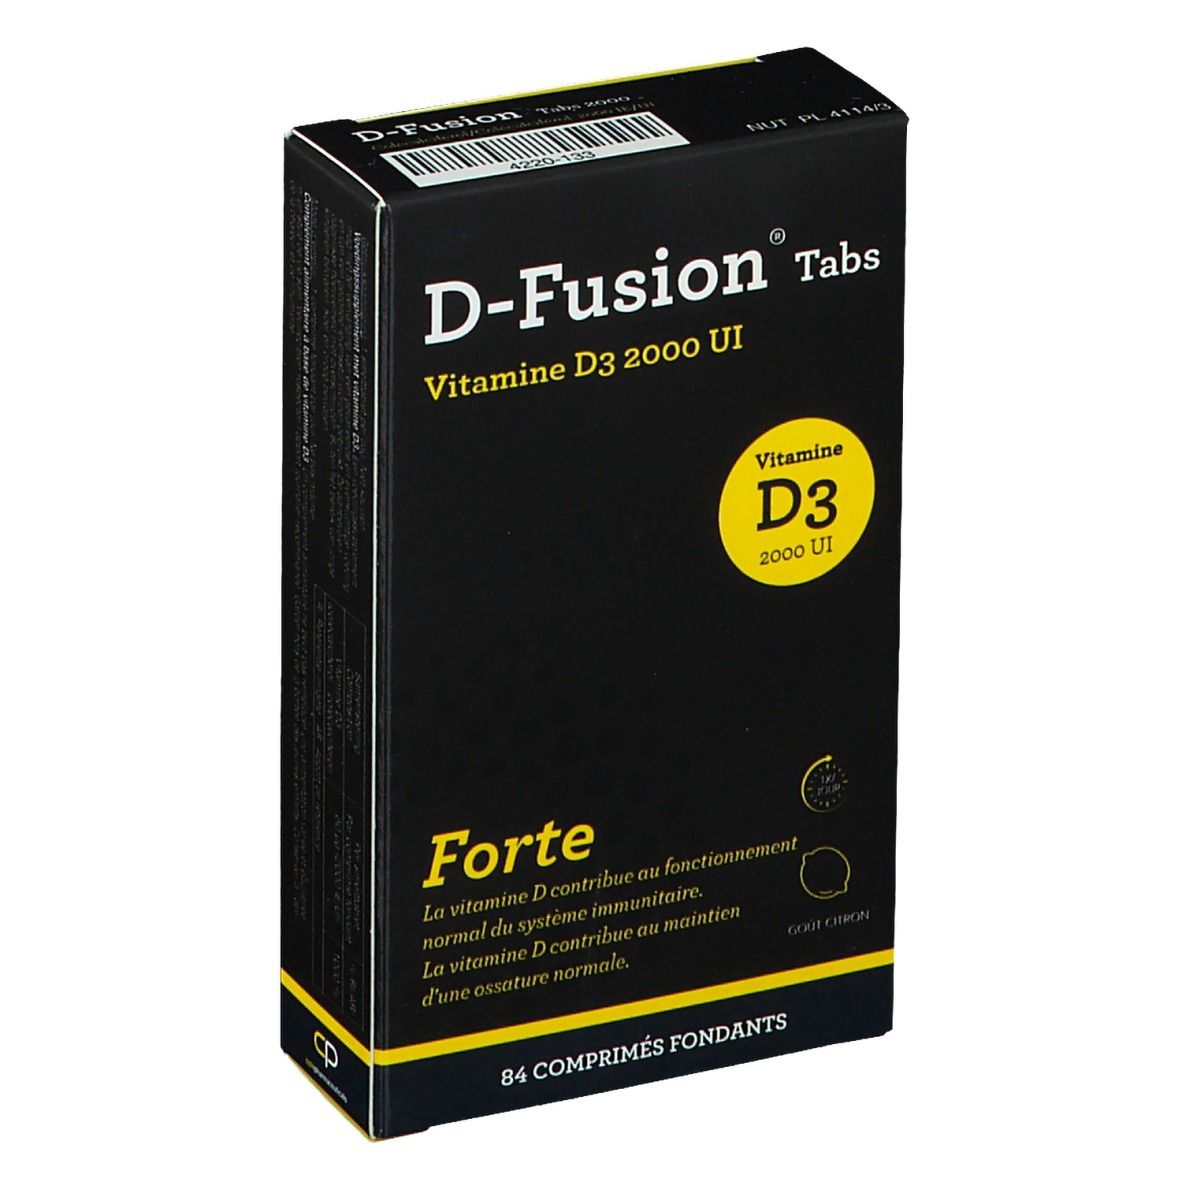 D-Fusion® Tabs Forte Vitamine D3 2000 UI